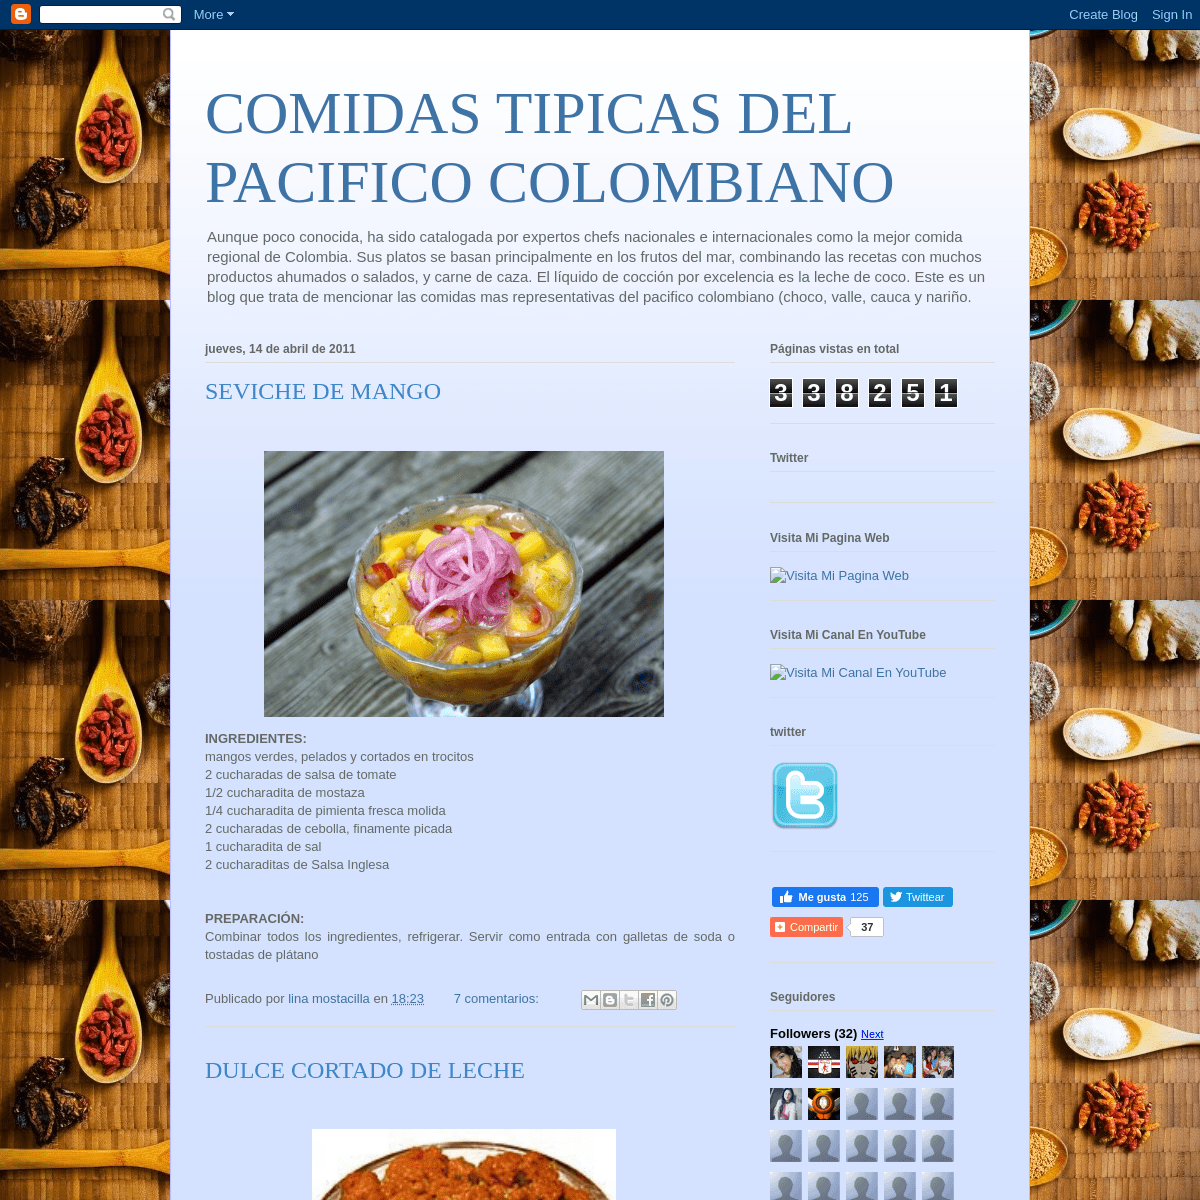 A complete backup of comidasdelpacifico.blogspot.com